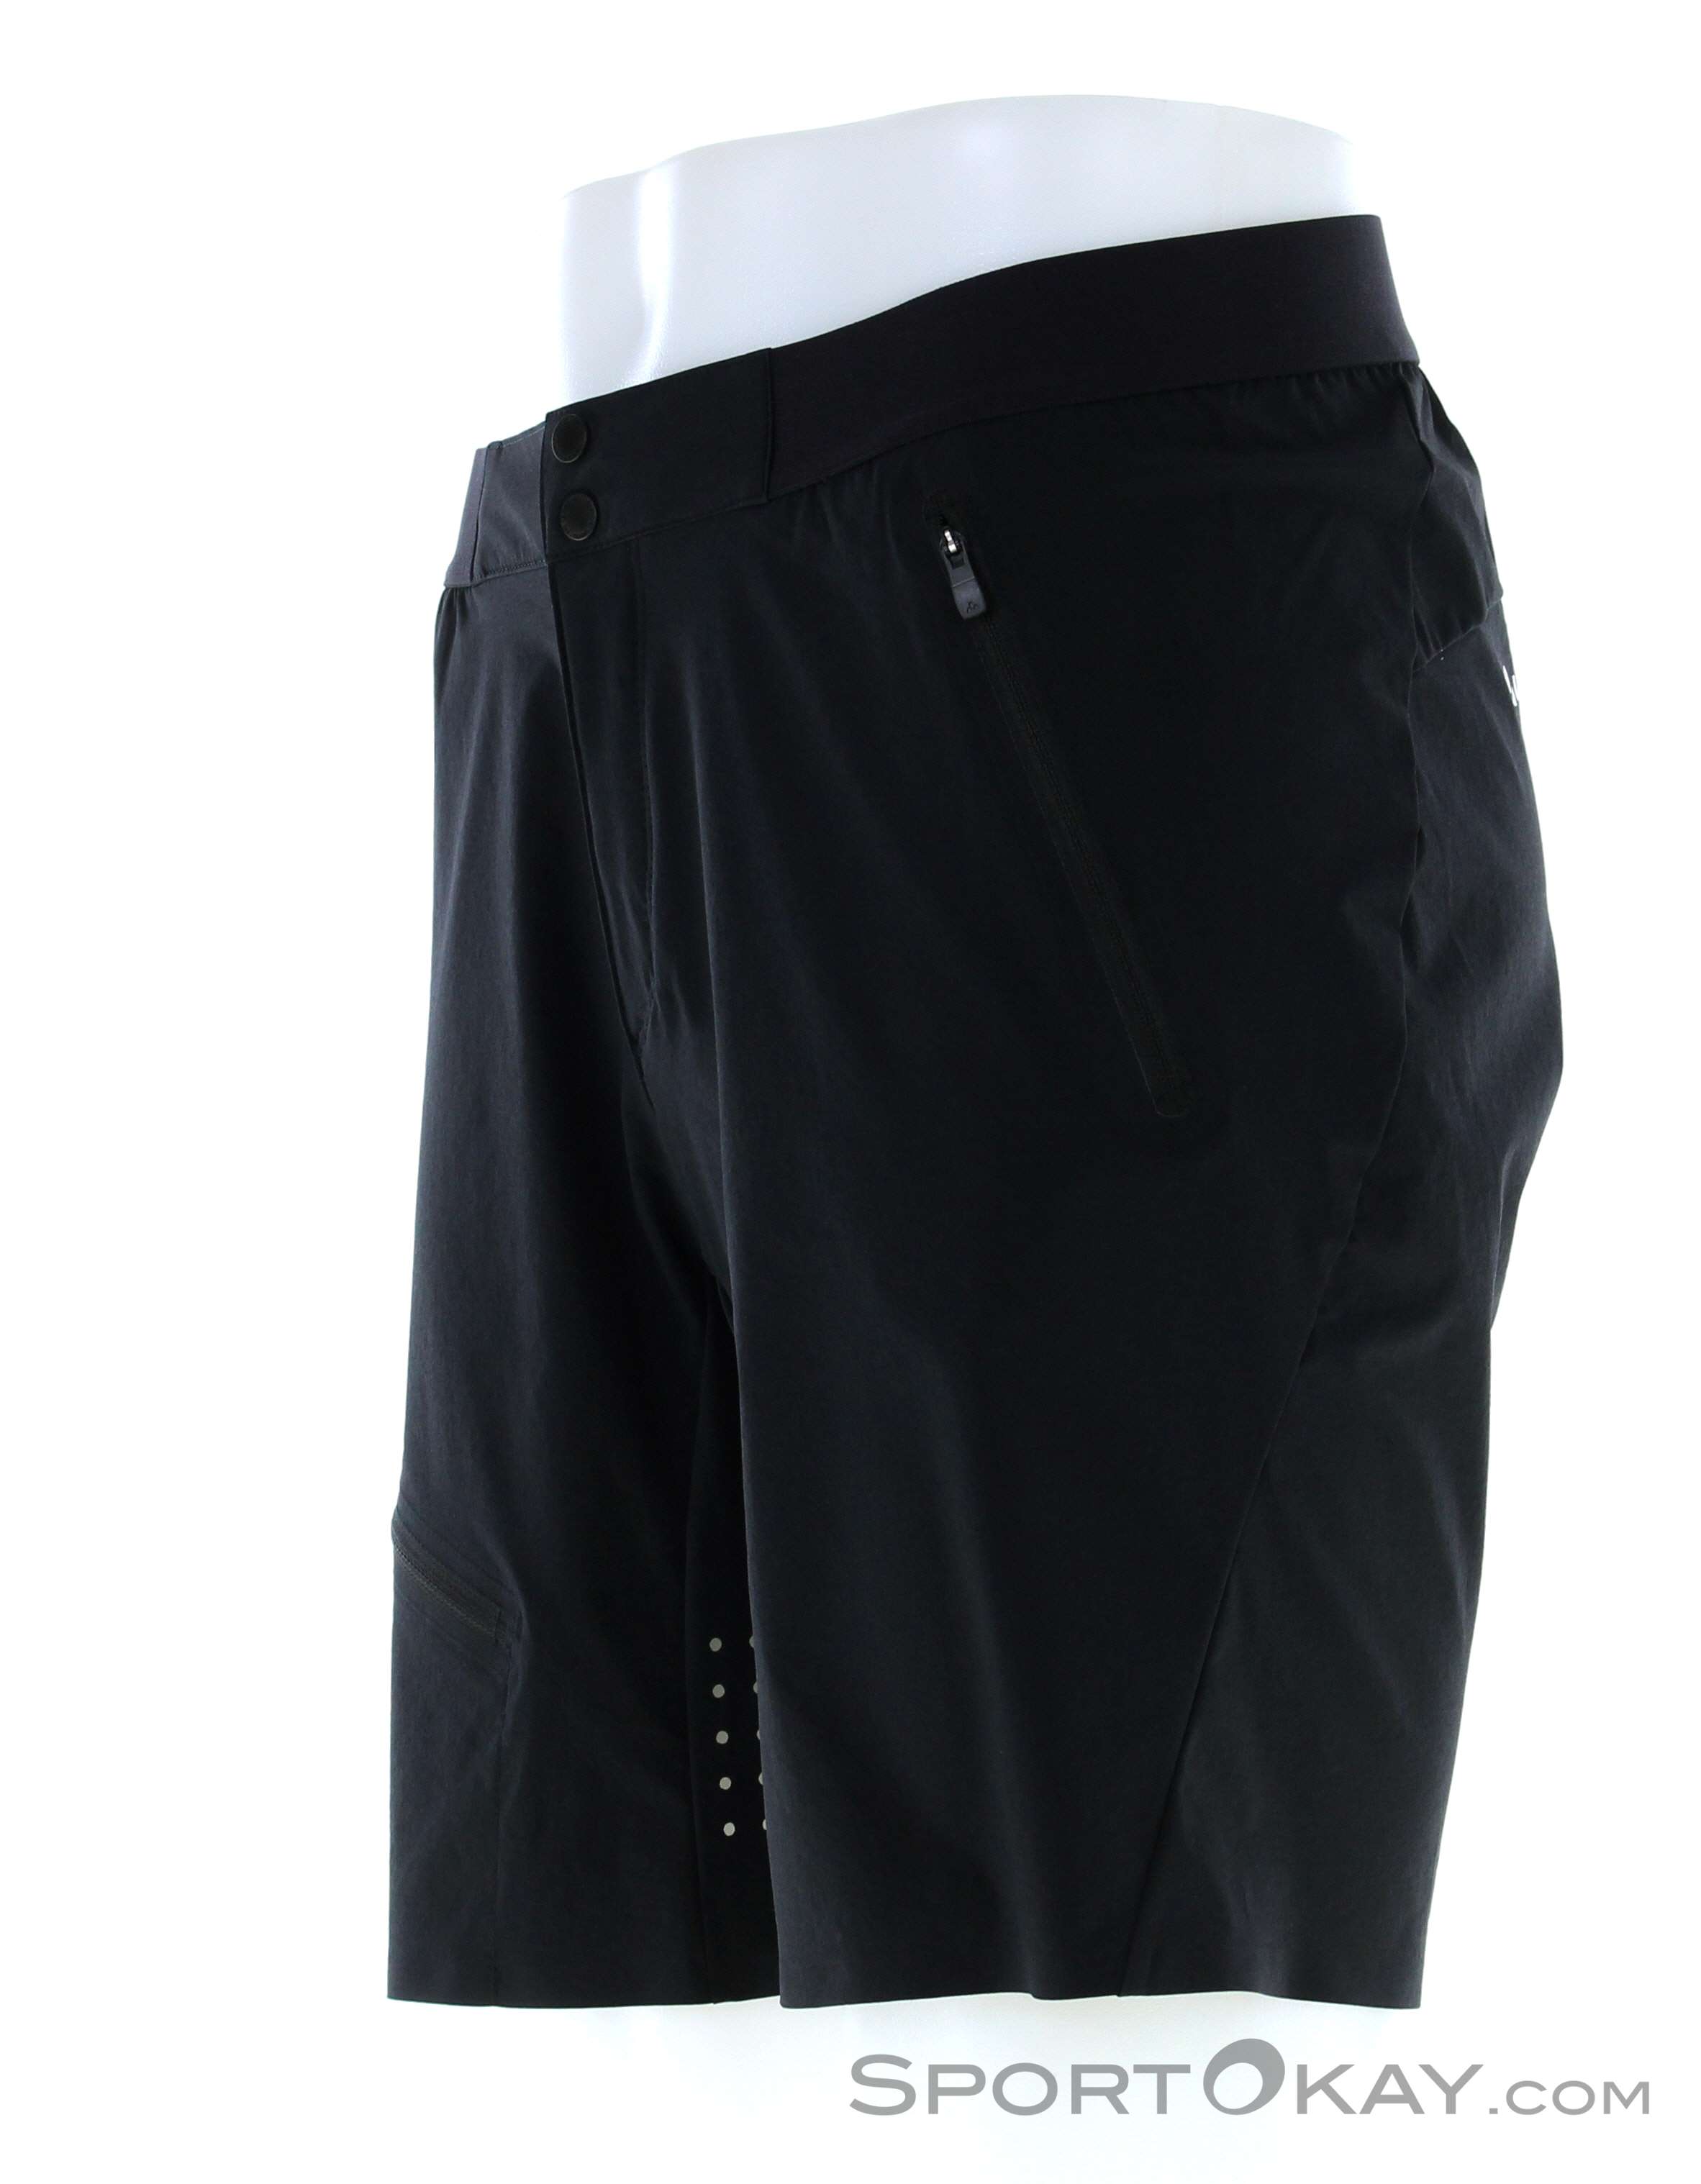 Vaude Men's Farley Stretch Bermuda II Black Walking shorts